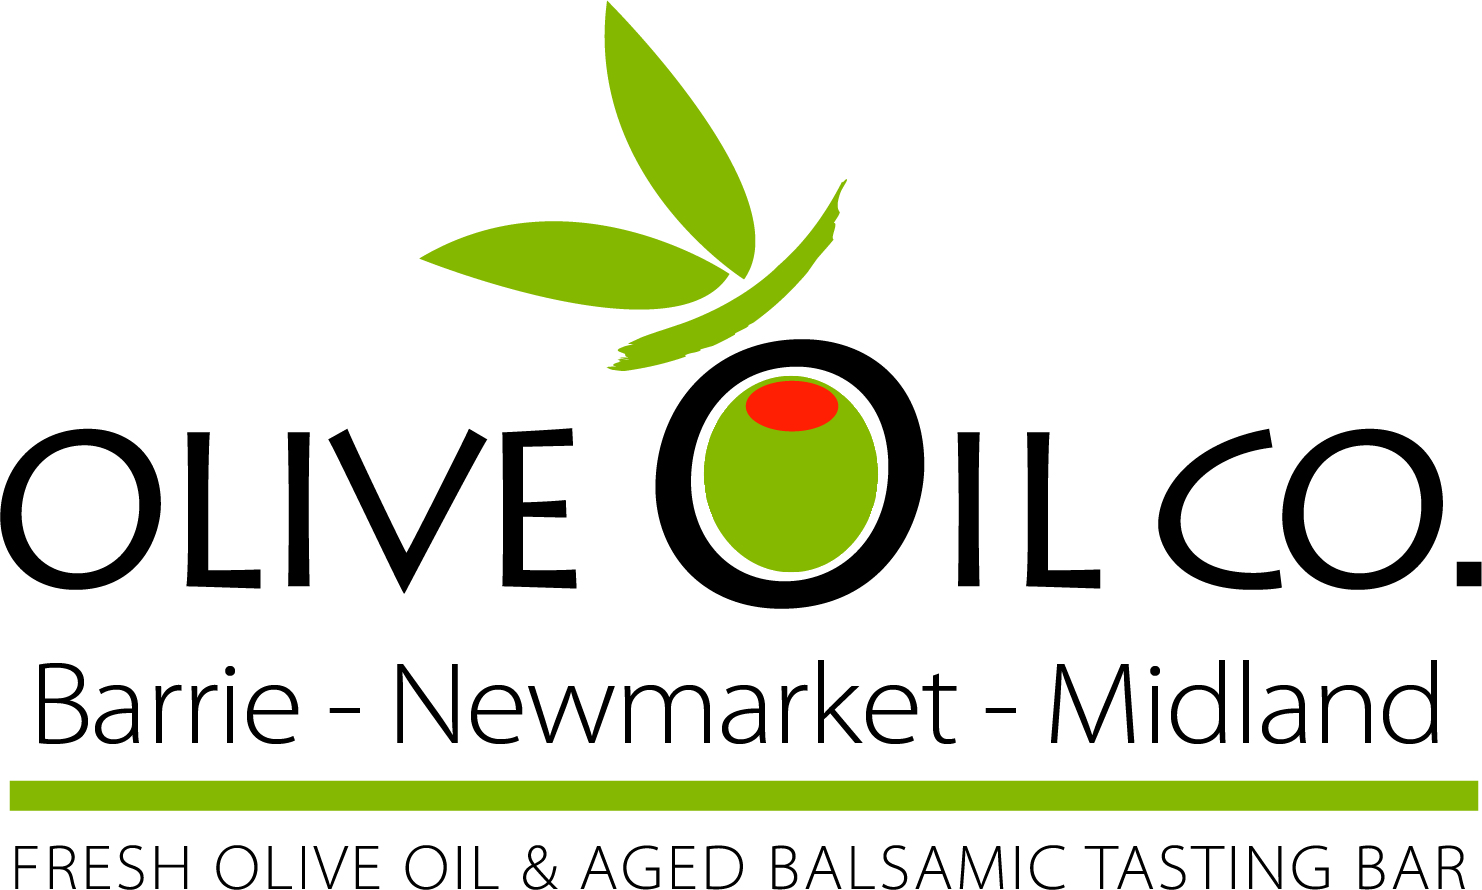 Olive Oil Co. Inc. Newmarket